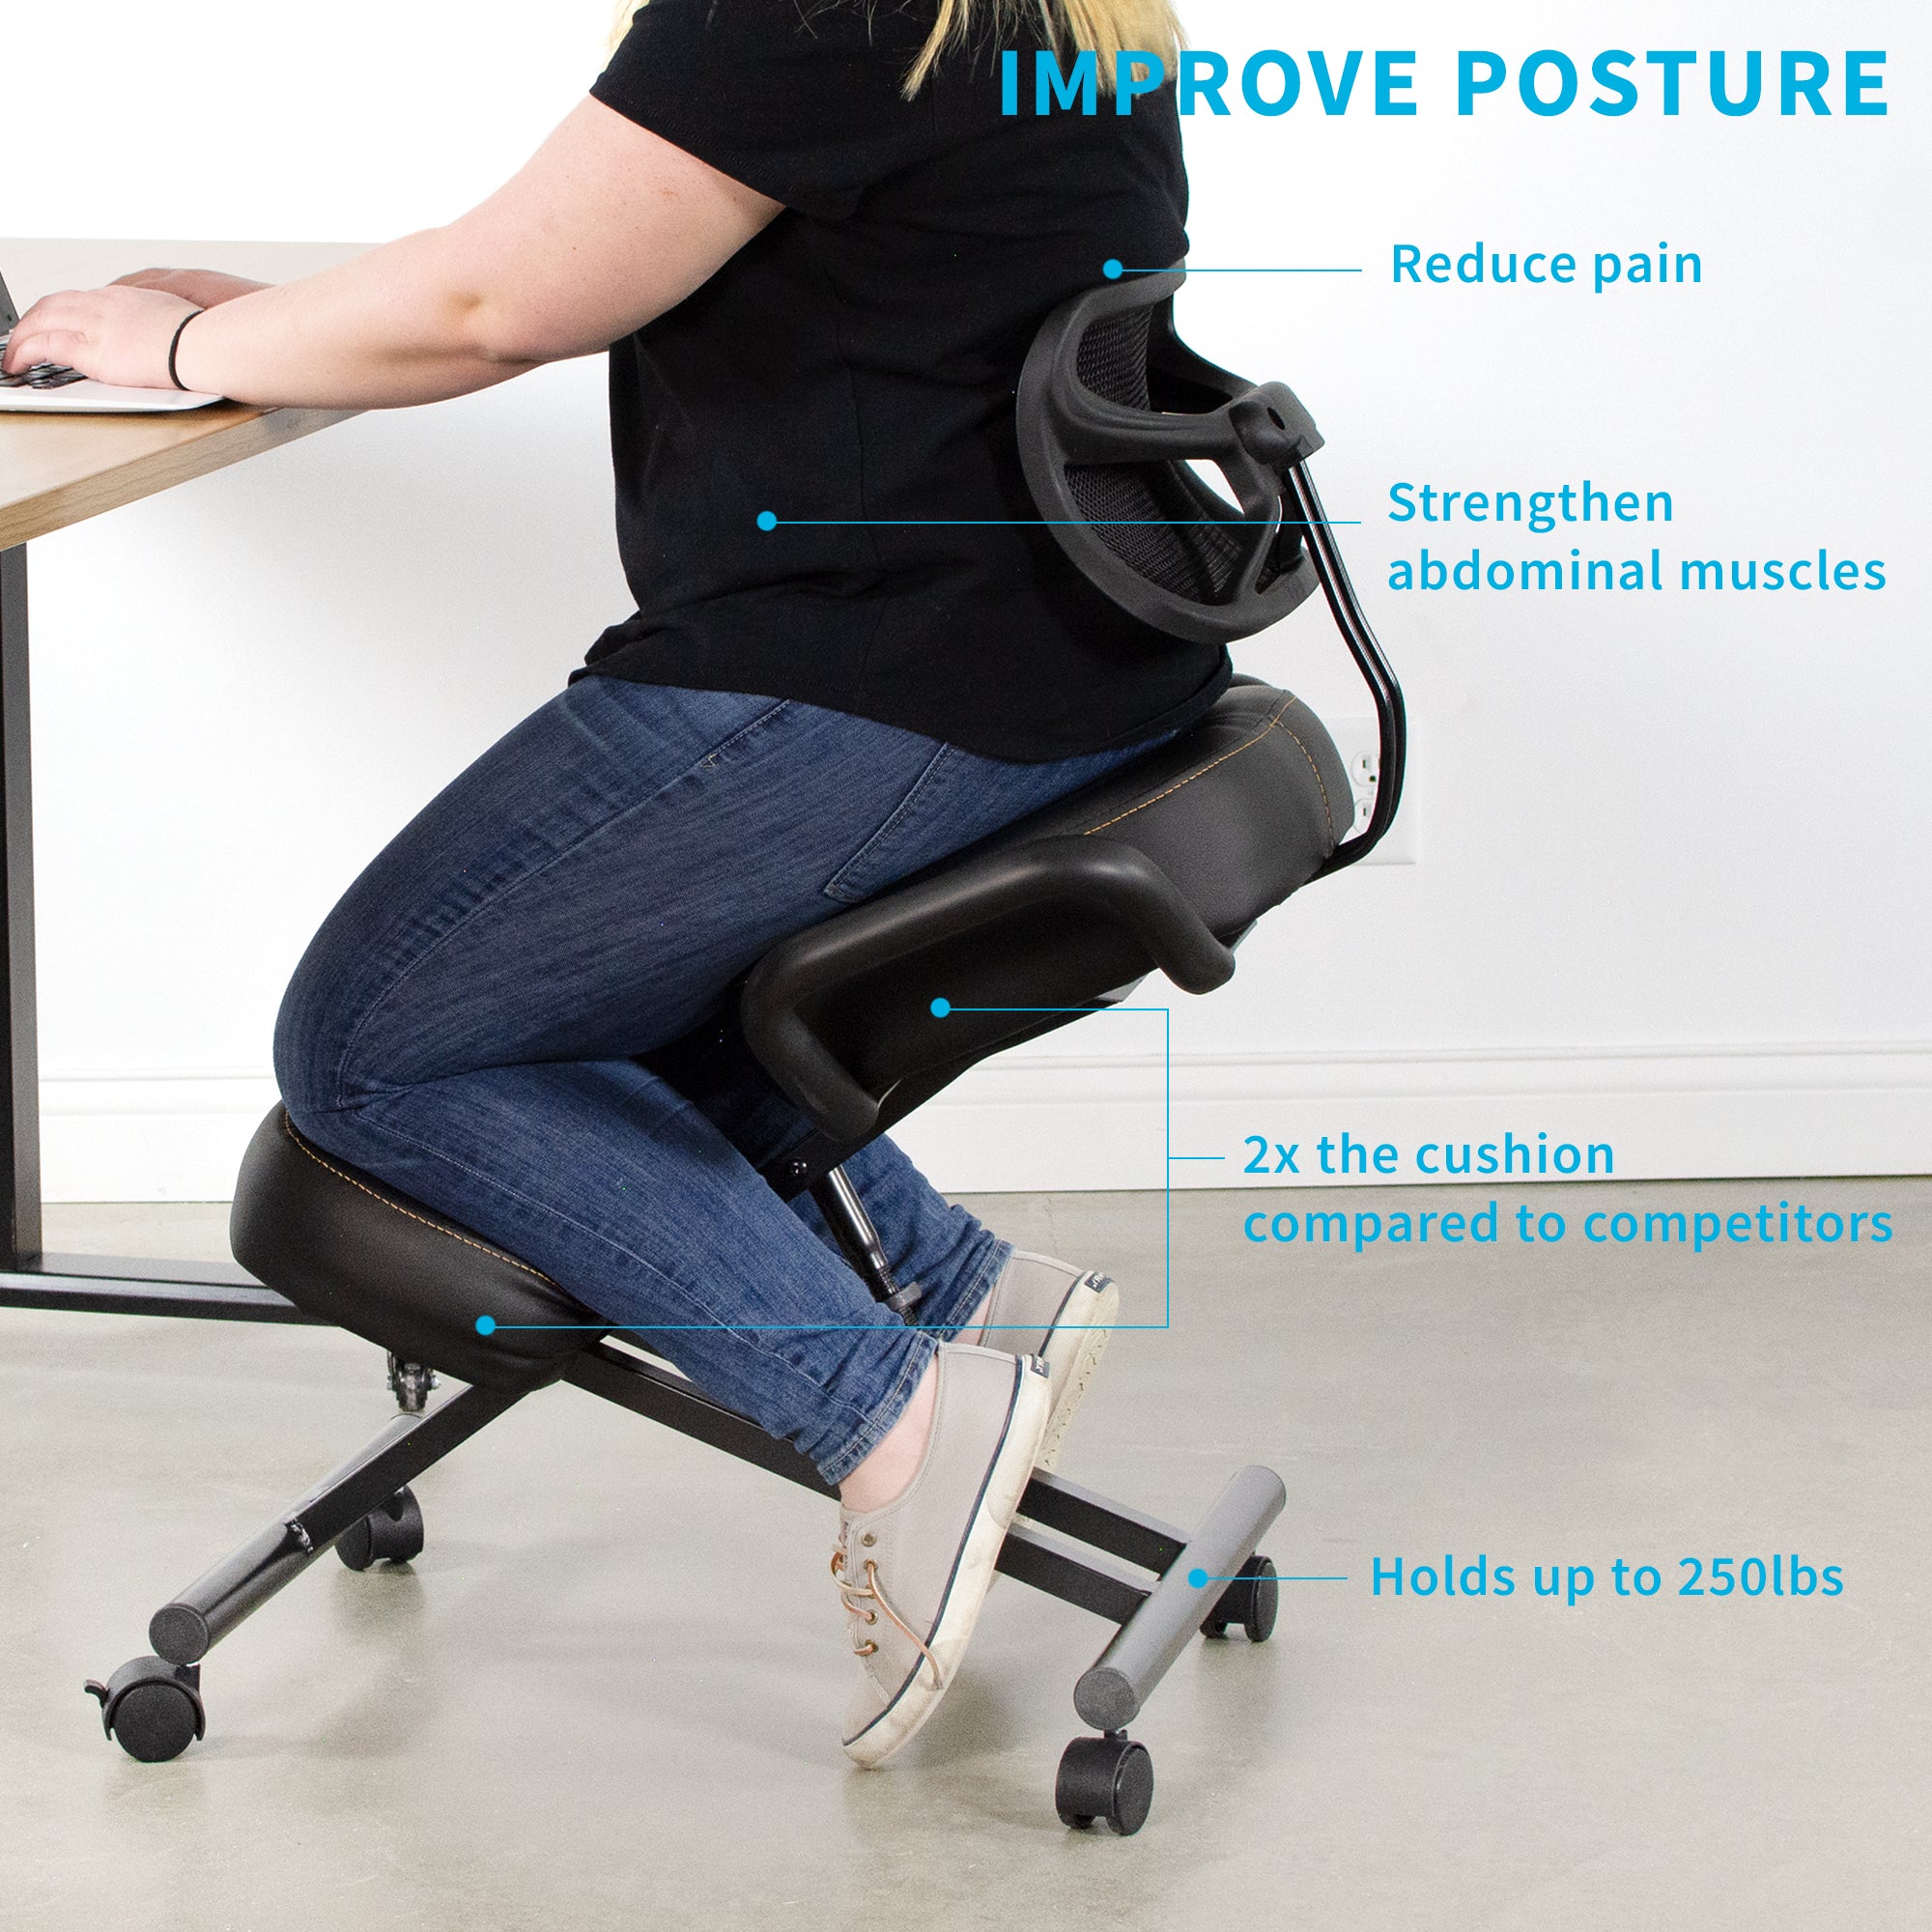 Black Adjustable Ergonomic Kneeling Chair with Back Support